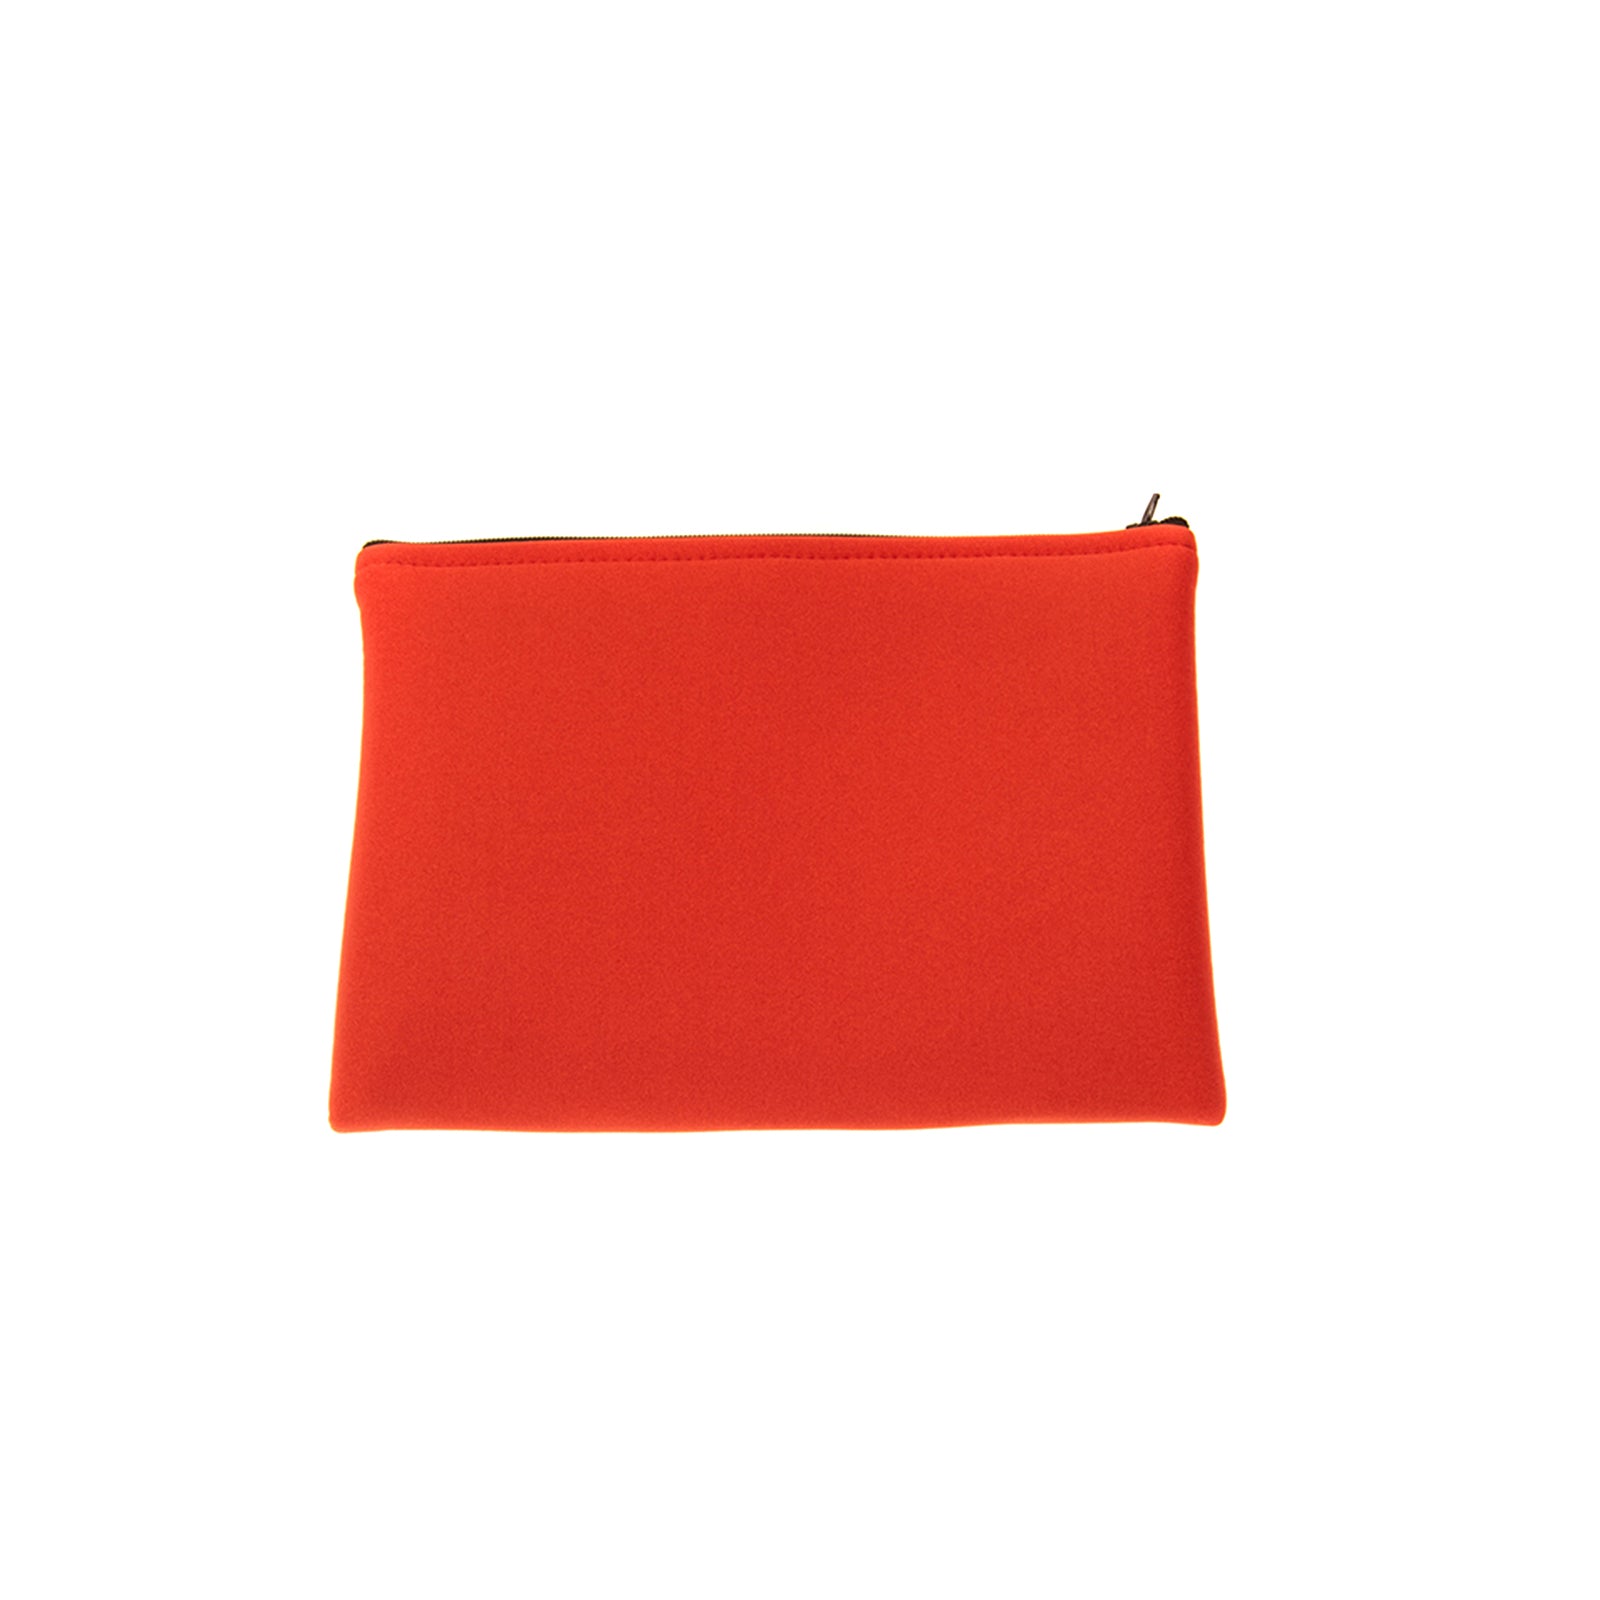 SARAH JANE Neoprene Clutch Bag Pouch Orange Zipped Made in Italy gallery main photo